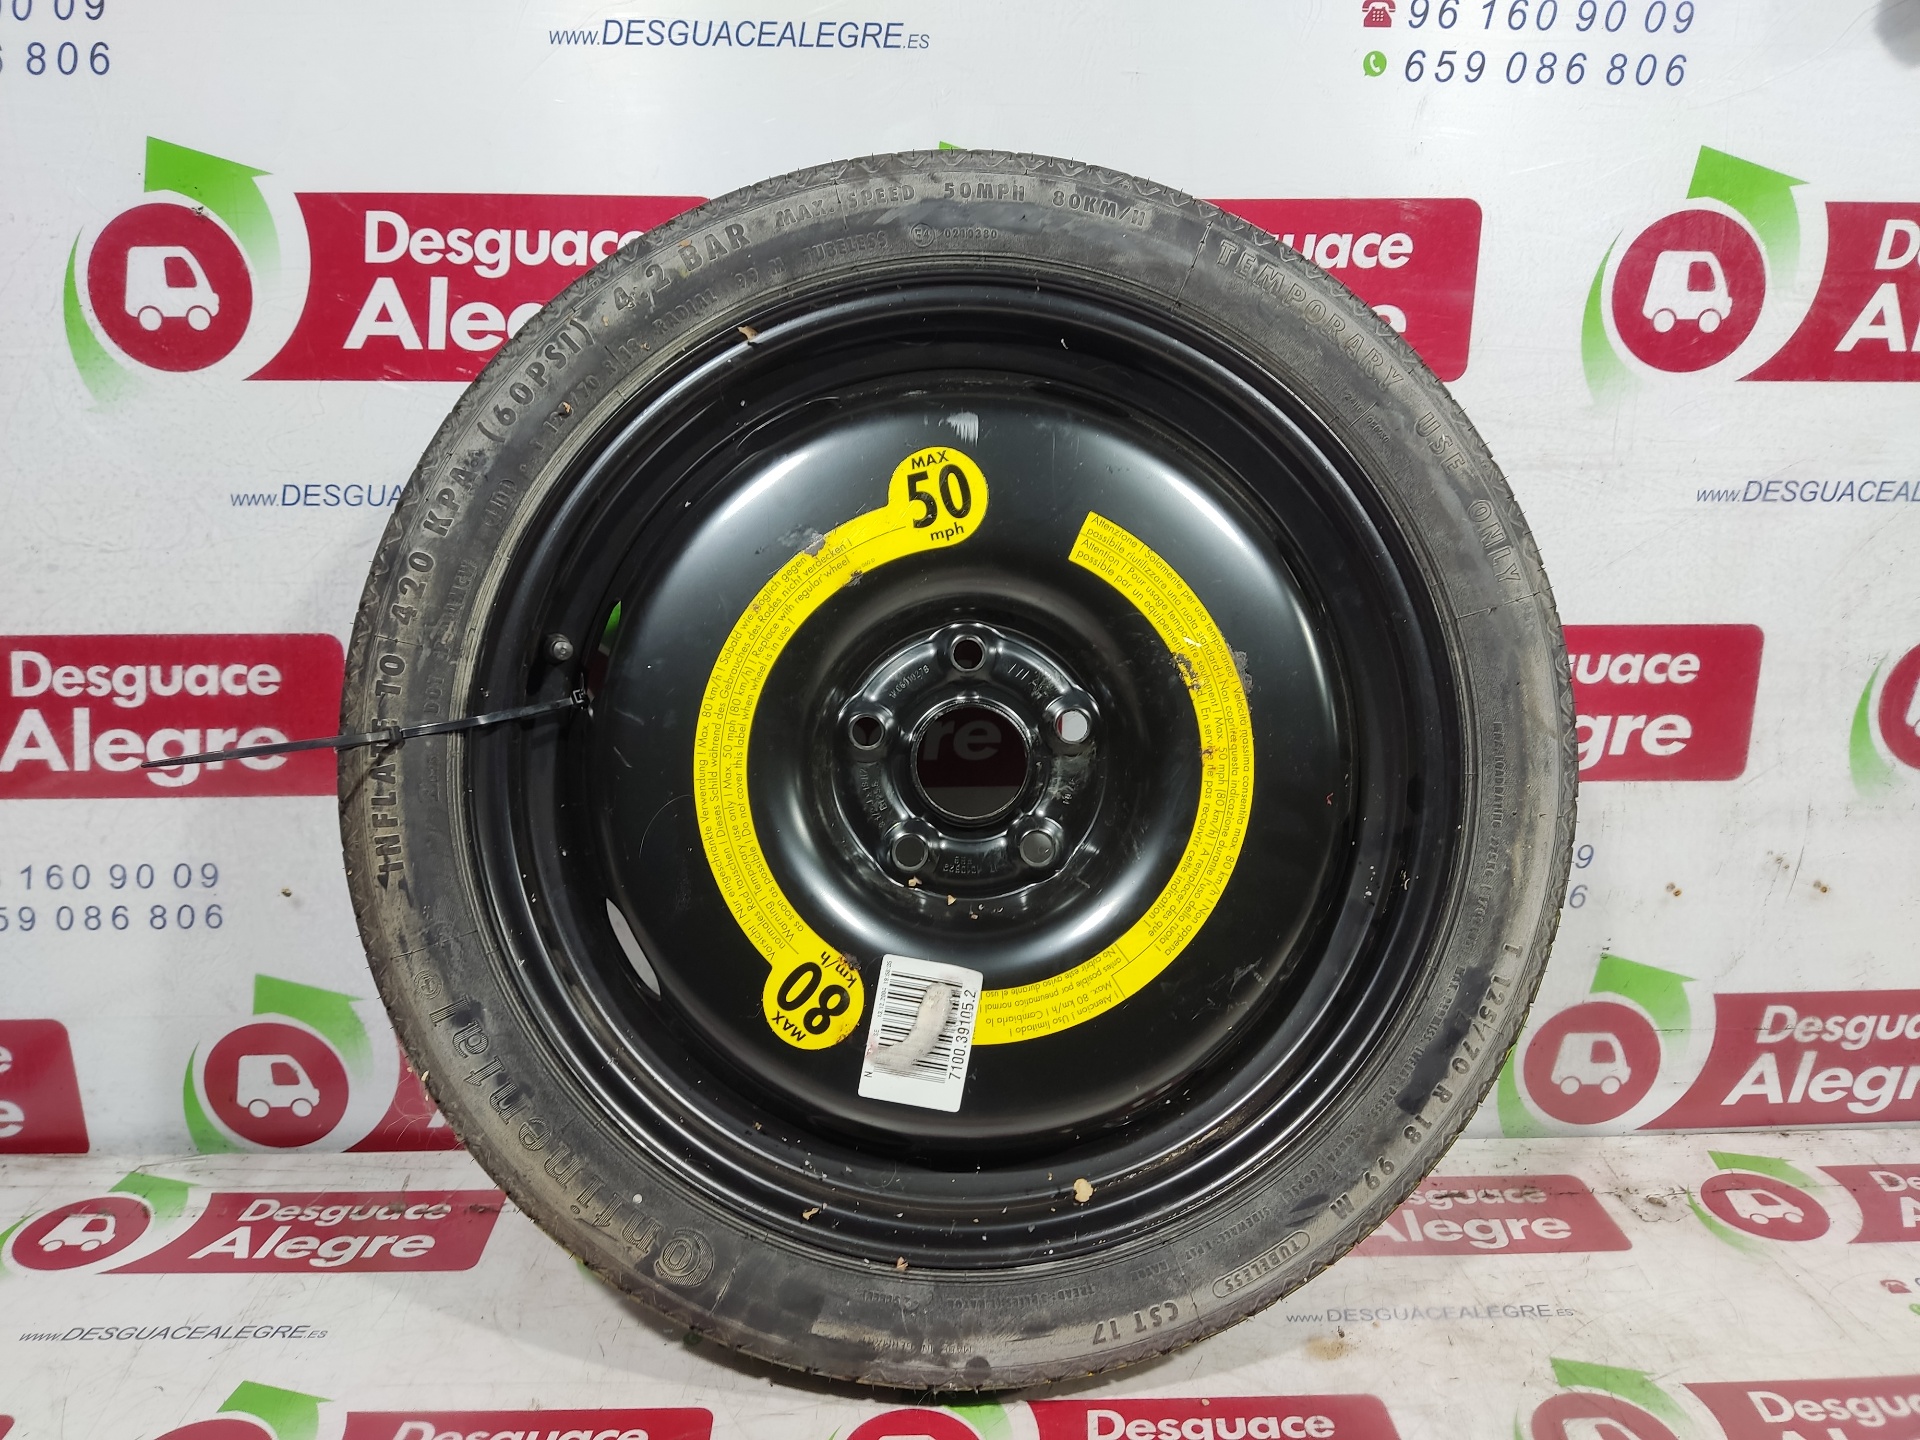 AUDI 5 Series Gran Turismo F07 (2010-2017) Rezerves ritenis 125-70-18 24813171